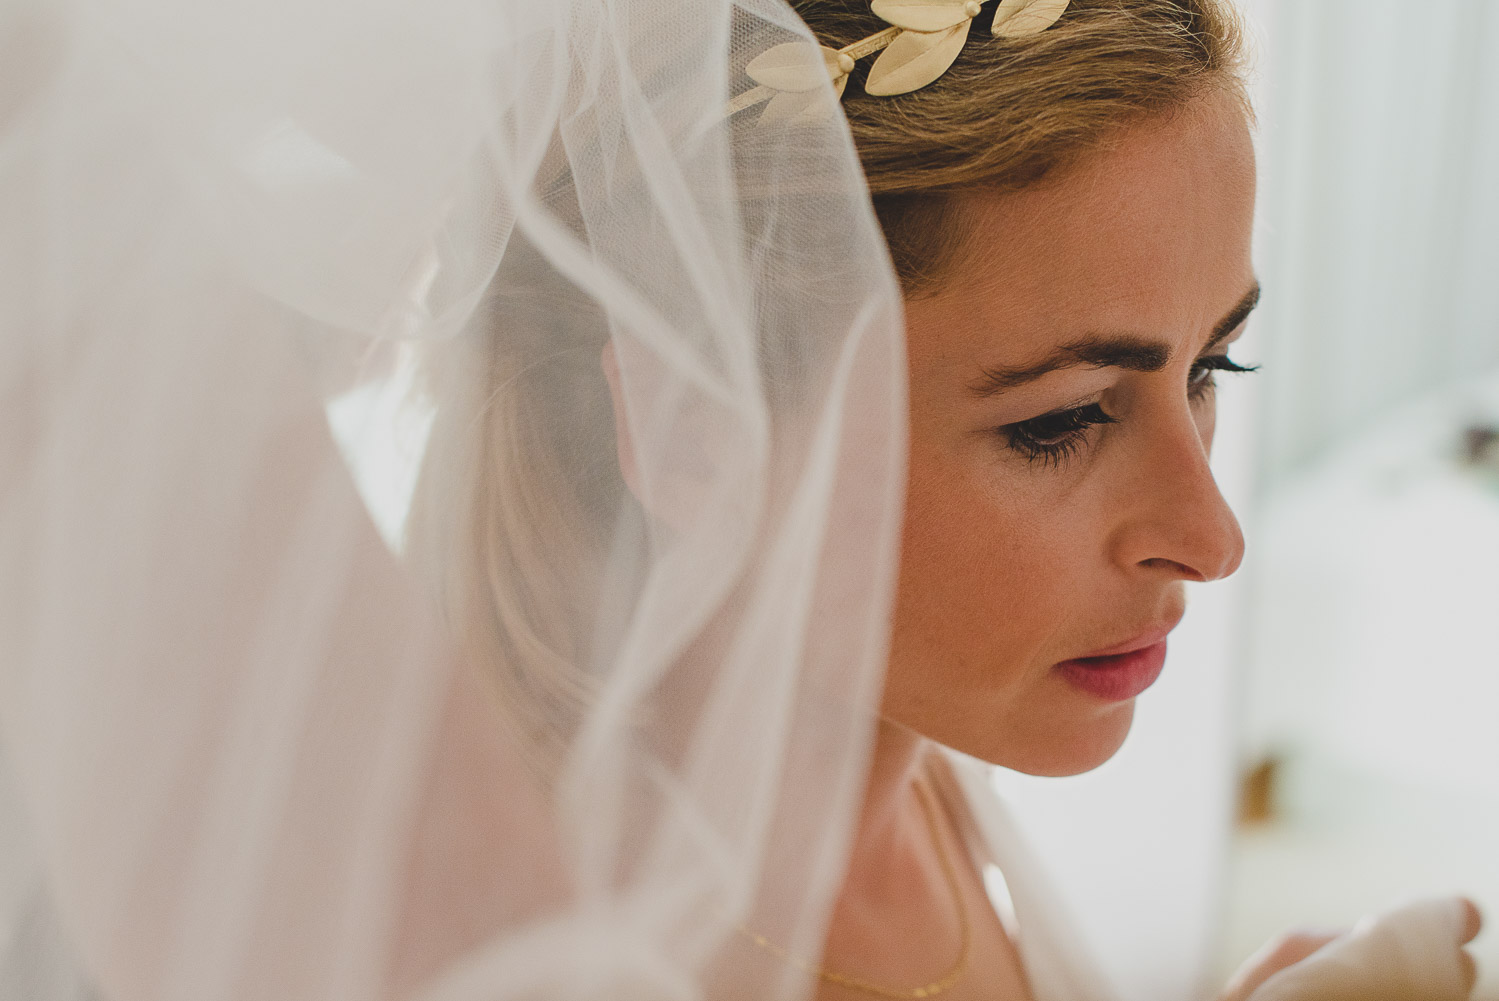 Wedding photographer Mykonos: close up of the bride at Mykonos wedding.